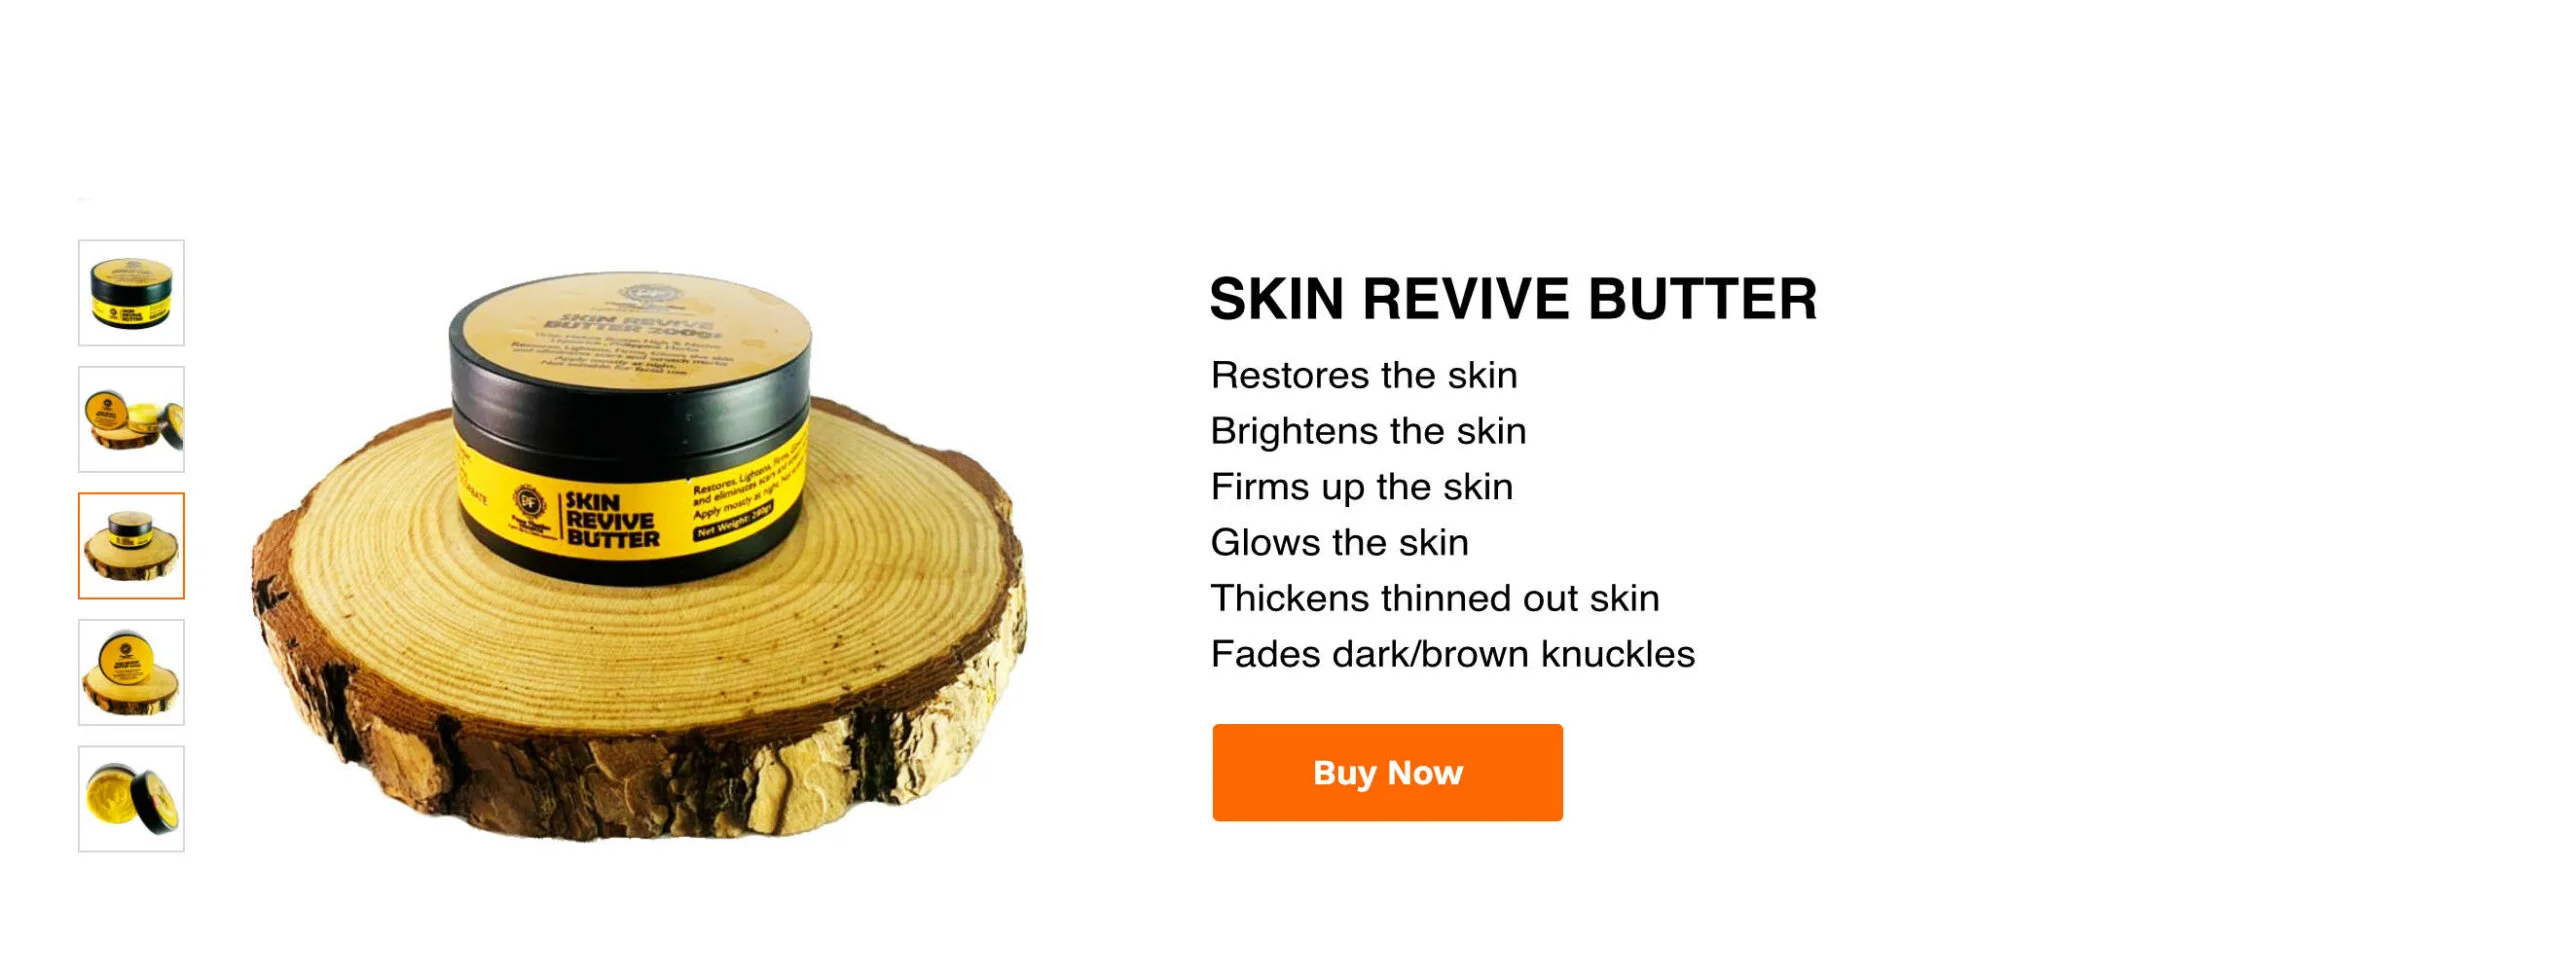 Skin Revive Butter